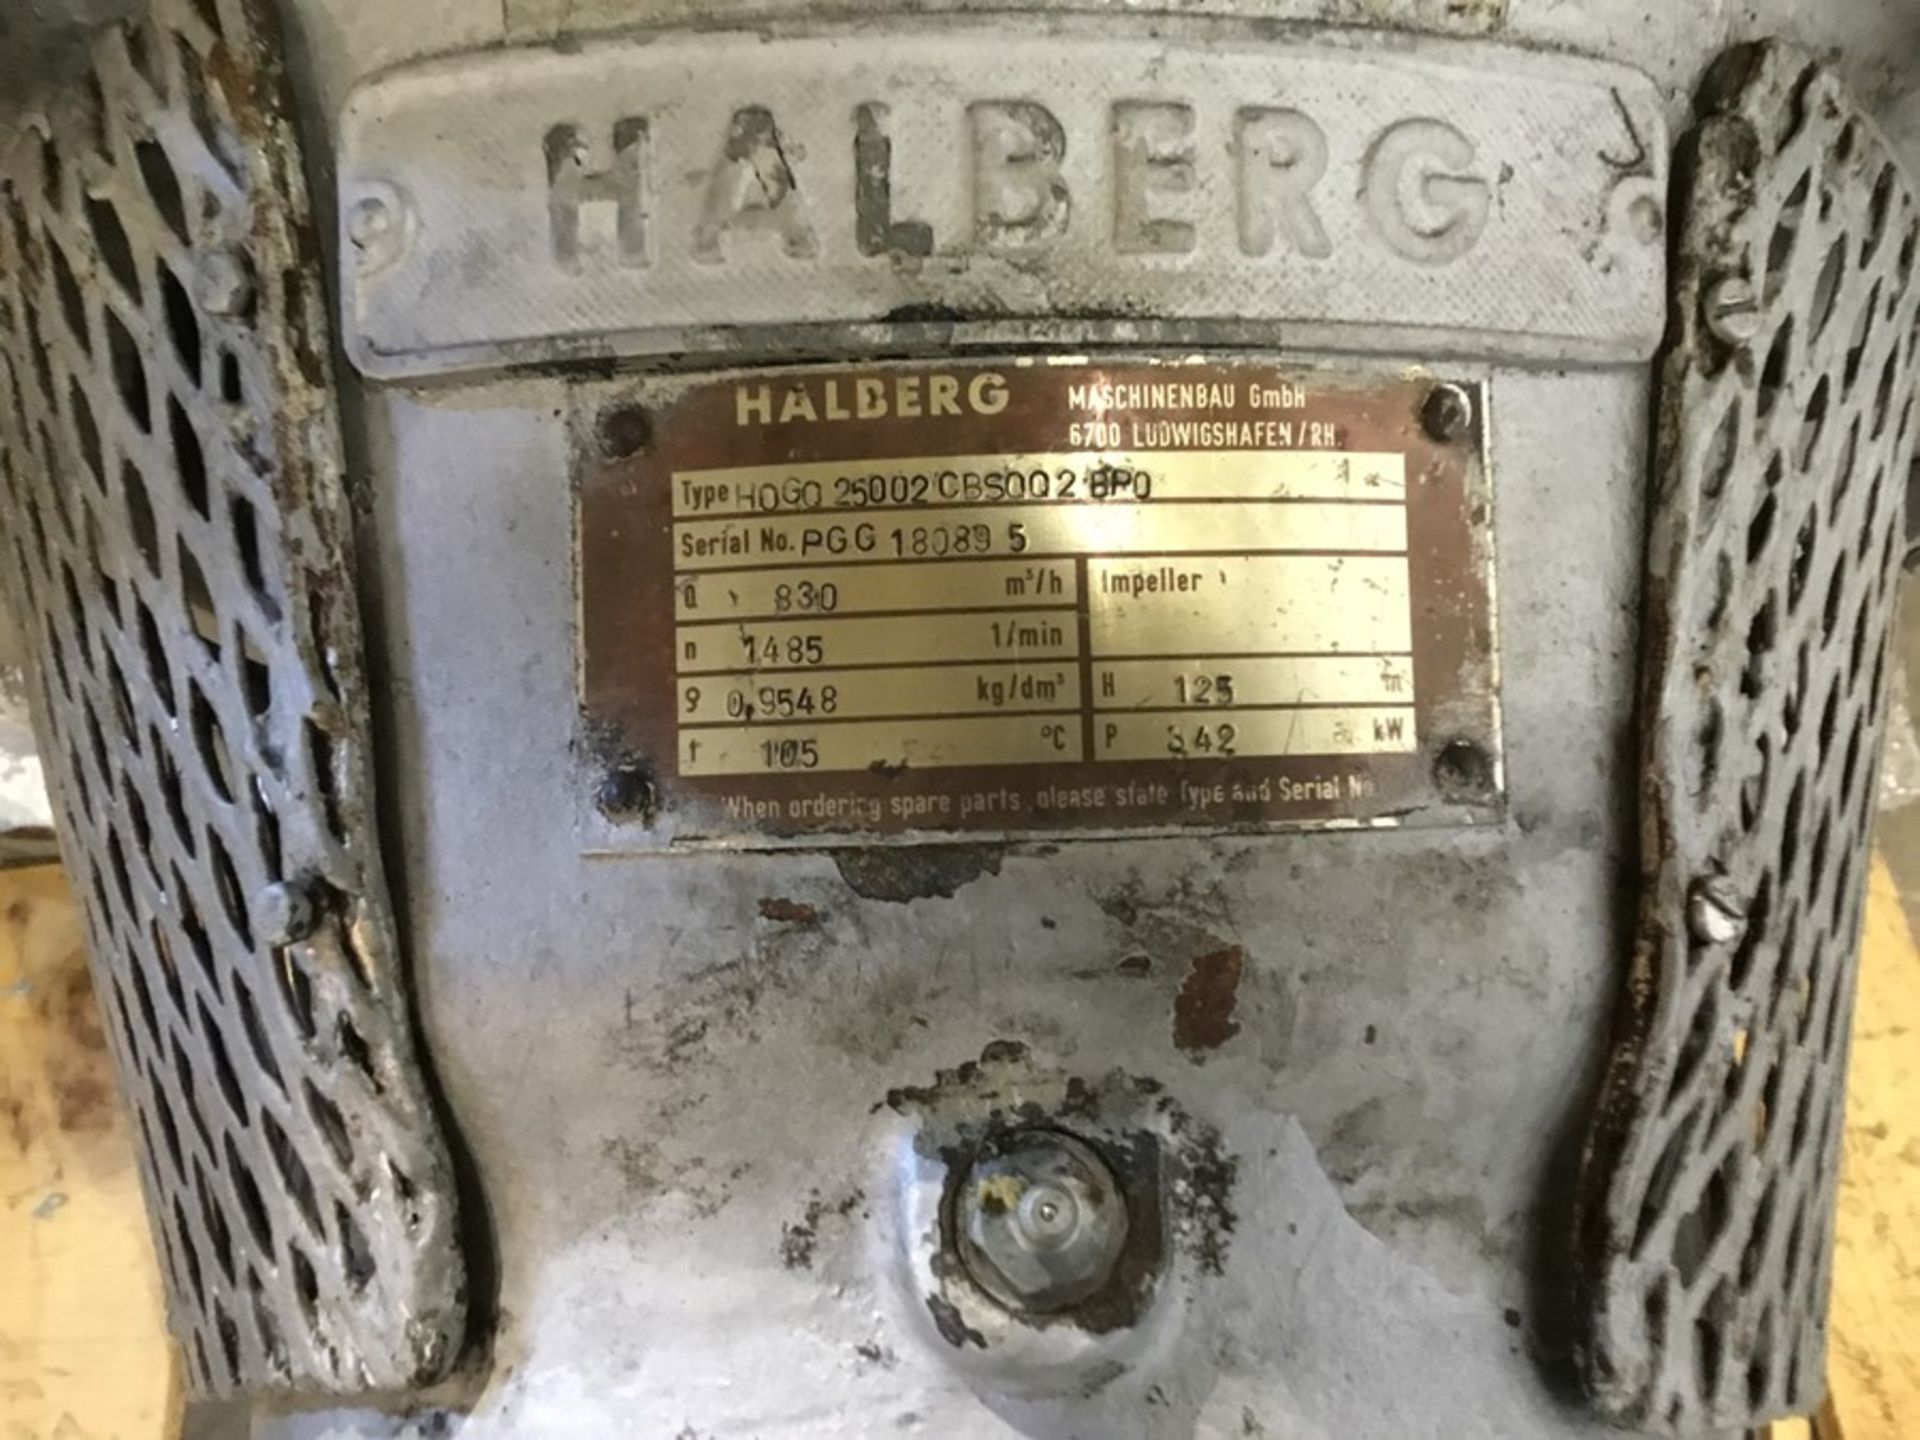 Halberg model HOGQ25002cbsqq2bqo Pump Flow: 830m/hour-0.9548kg/dm3 Pressure:125Metre head, - Image 13 of 24